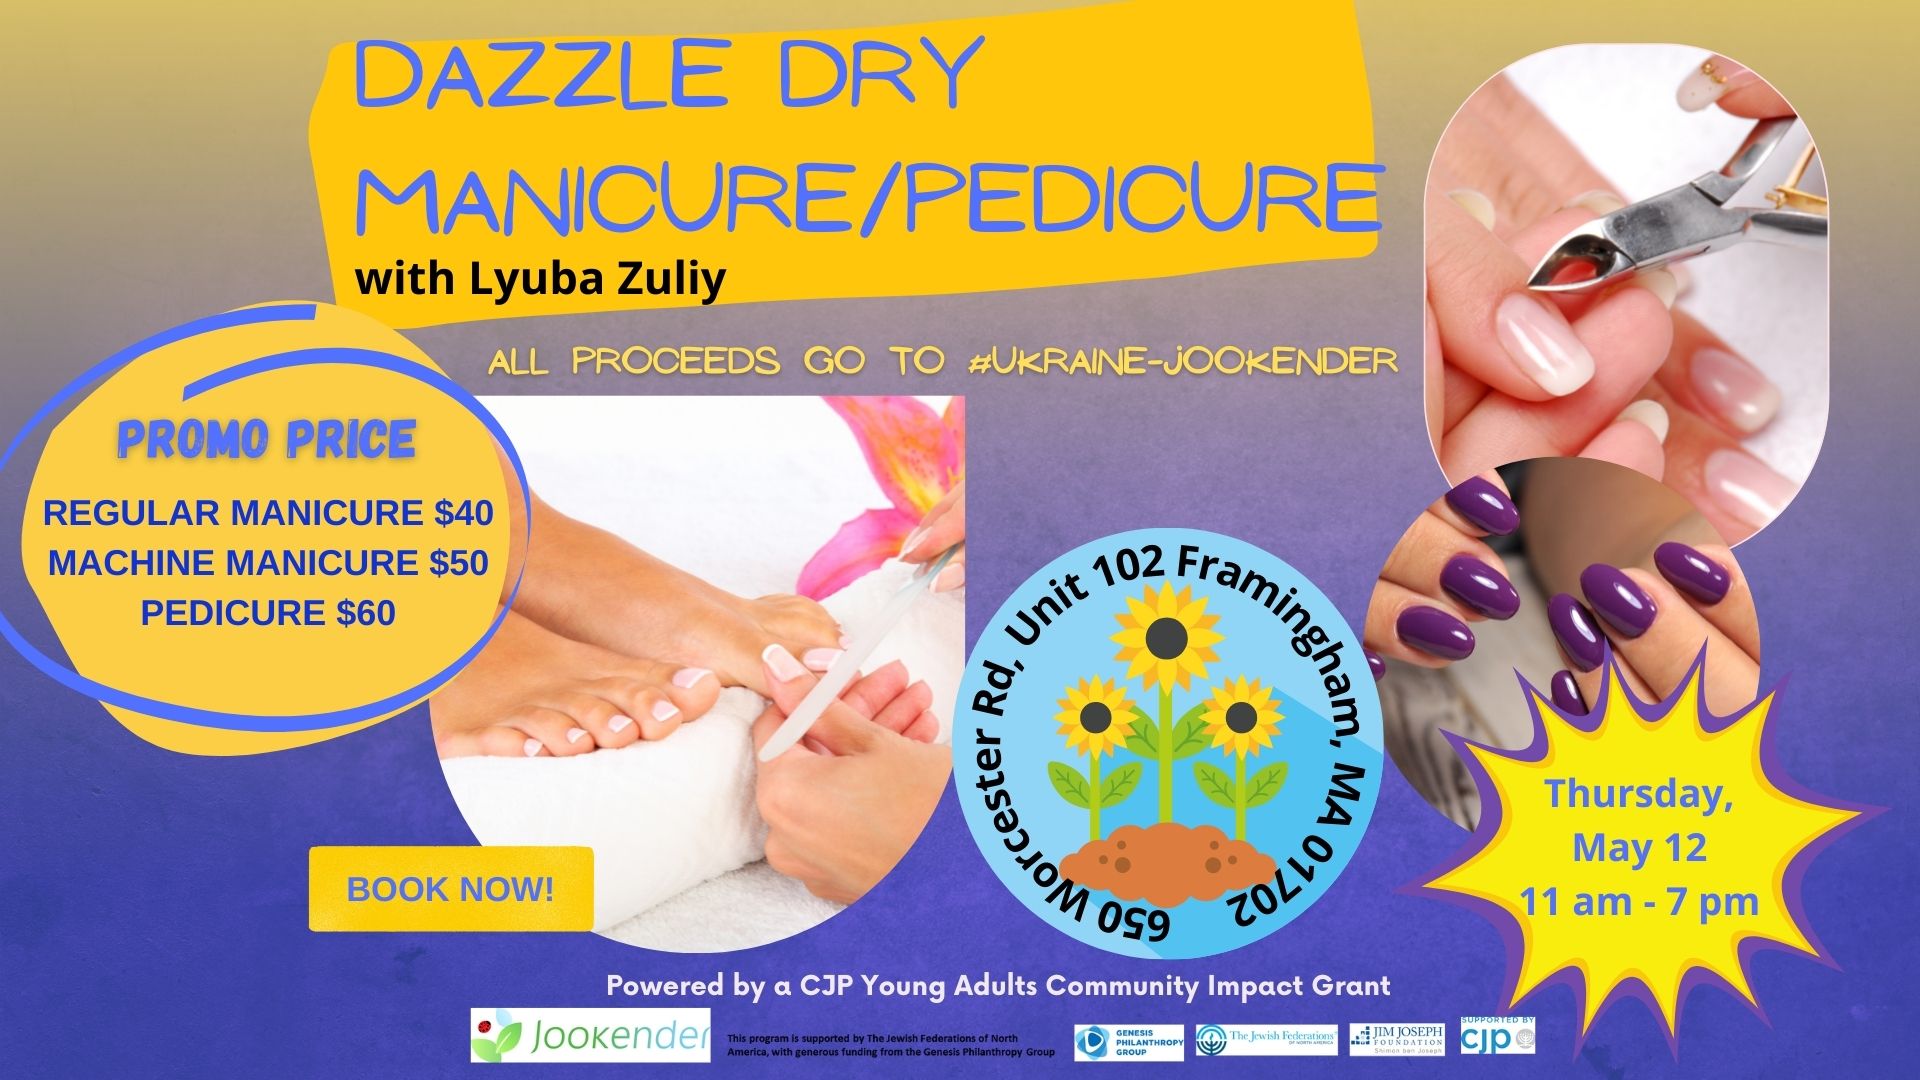 Dazzle Dry Manicure/Pedicure